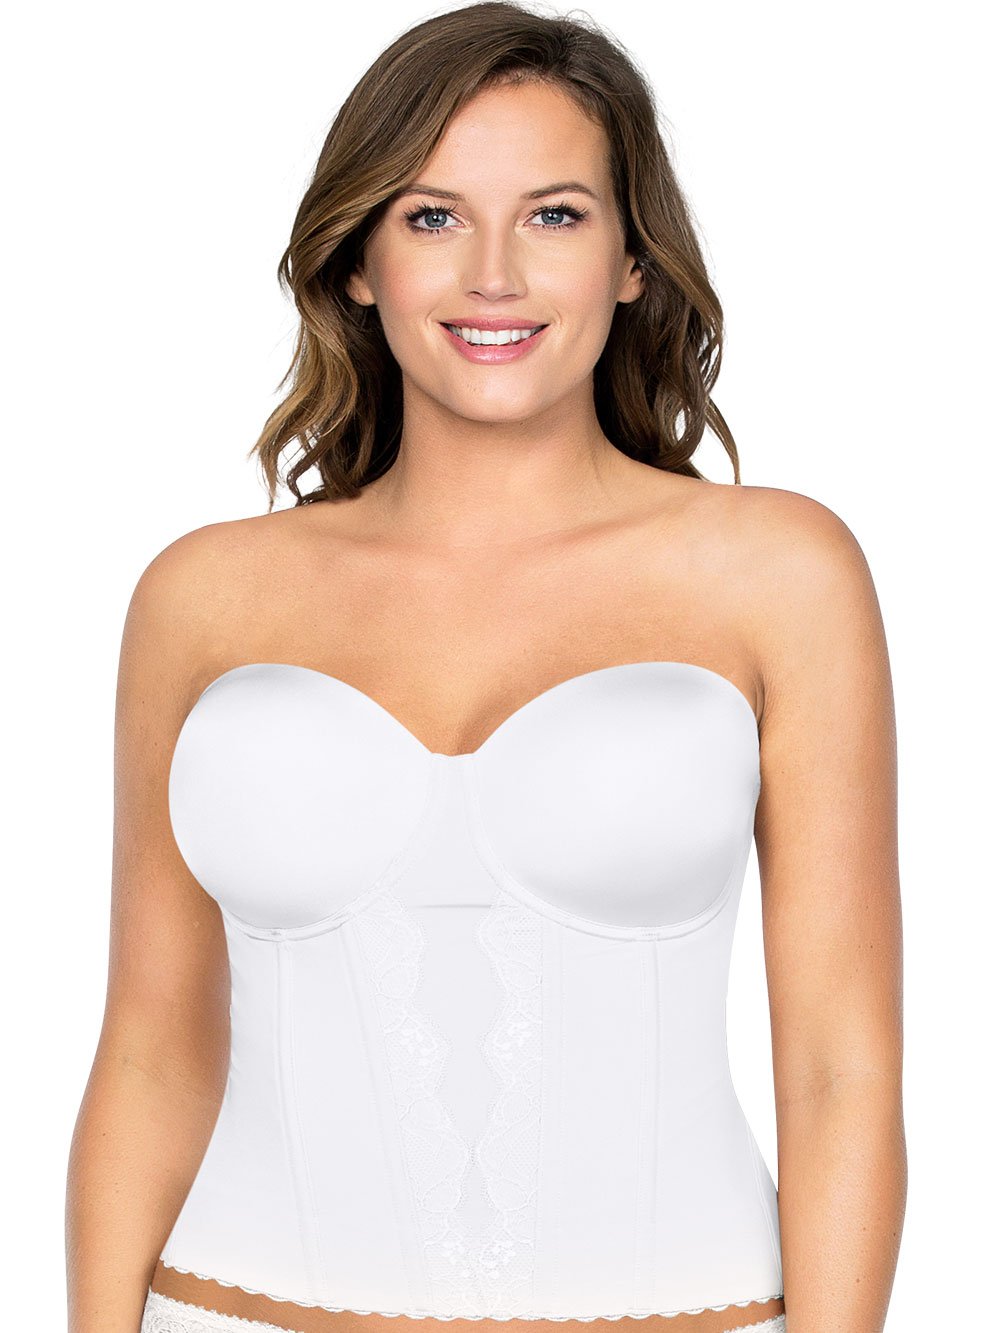 Women's white Strapless Bras Size 32D